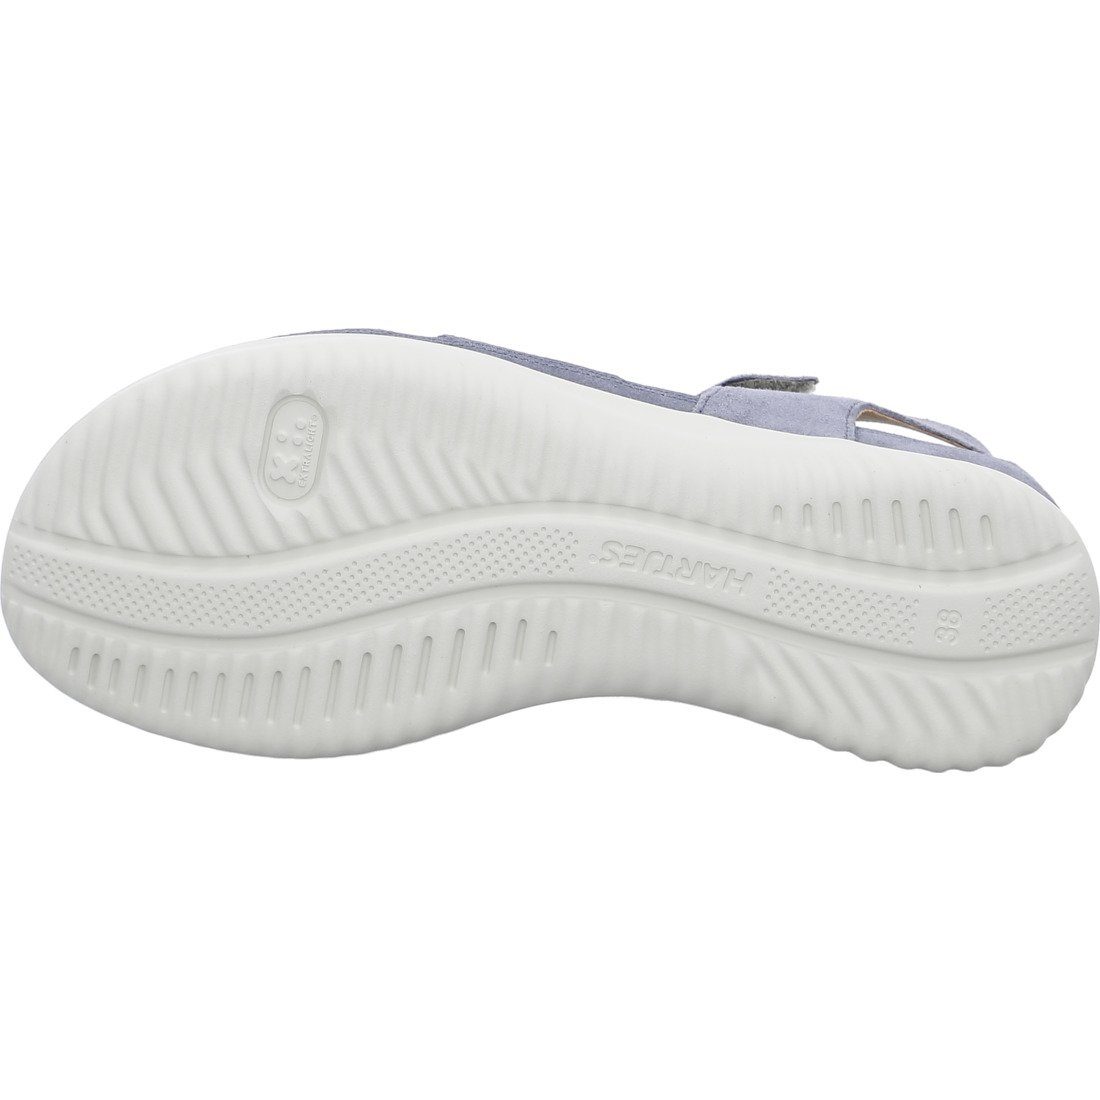 Hartjes Hartjes Schuhe, Sandalette - Velours blau 048735 Sandalette Breeze